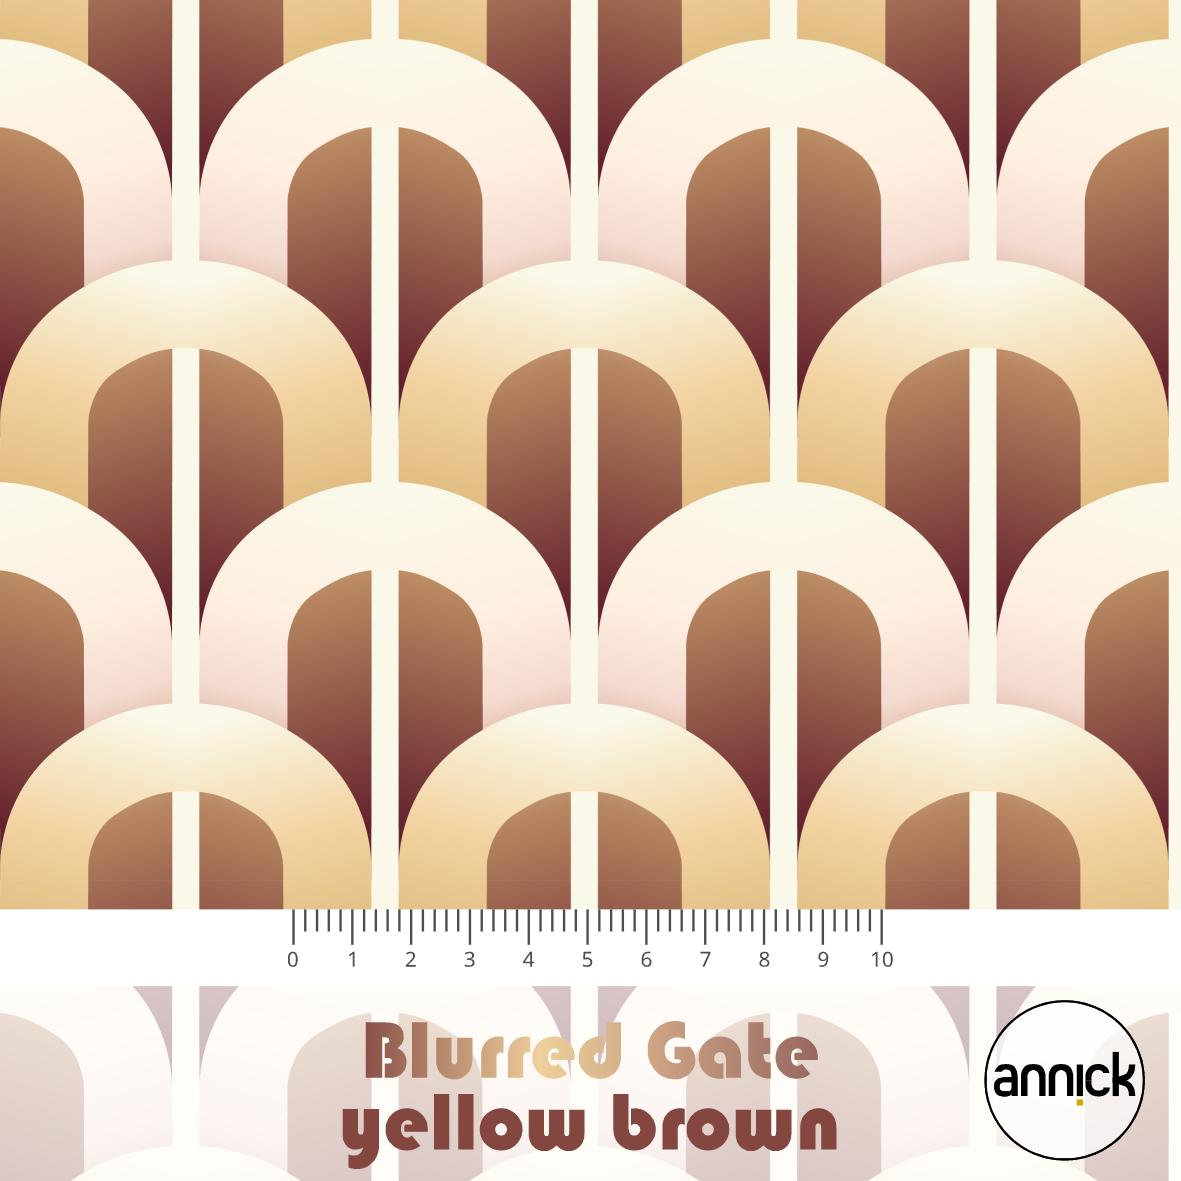 Blurred Gate yellow brown